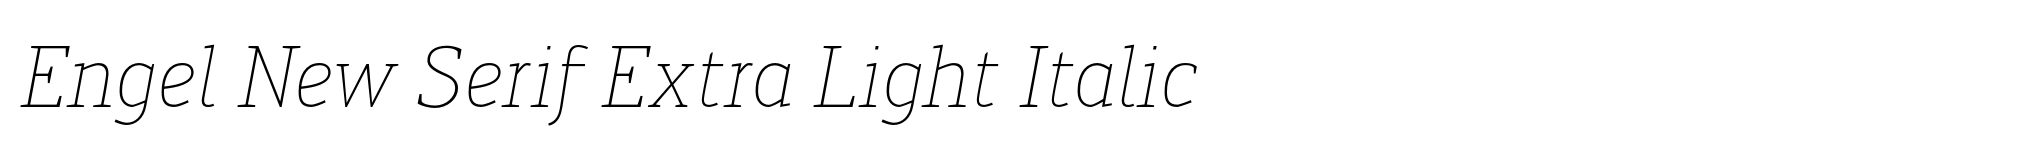 Engel New Serif Extra Light Italic image